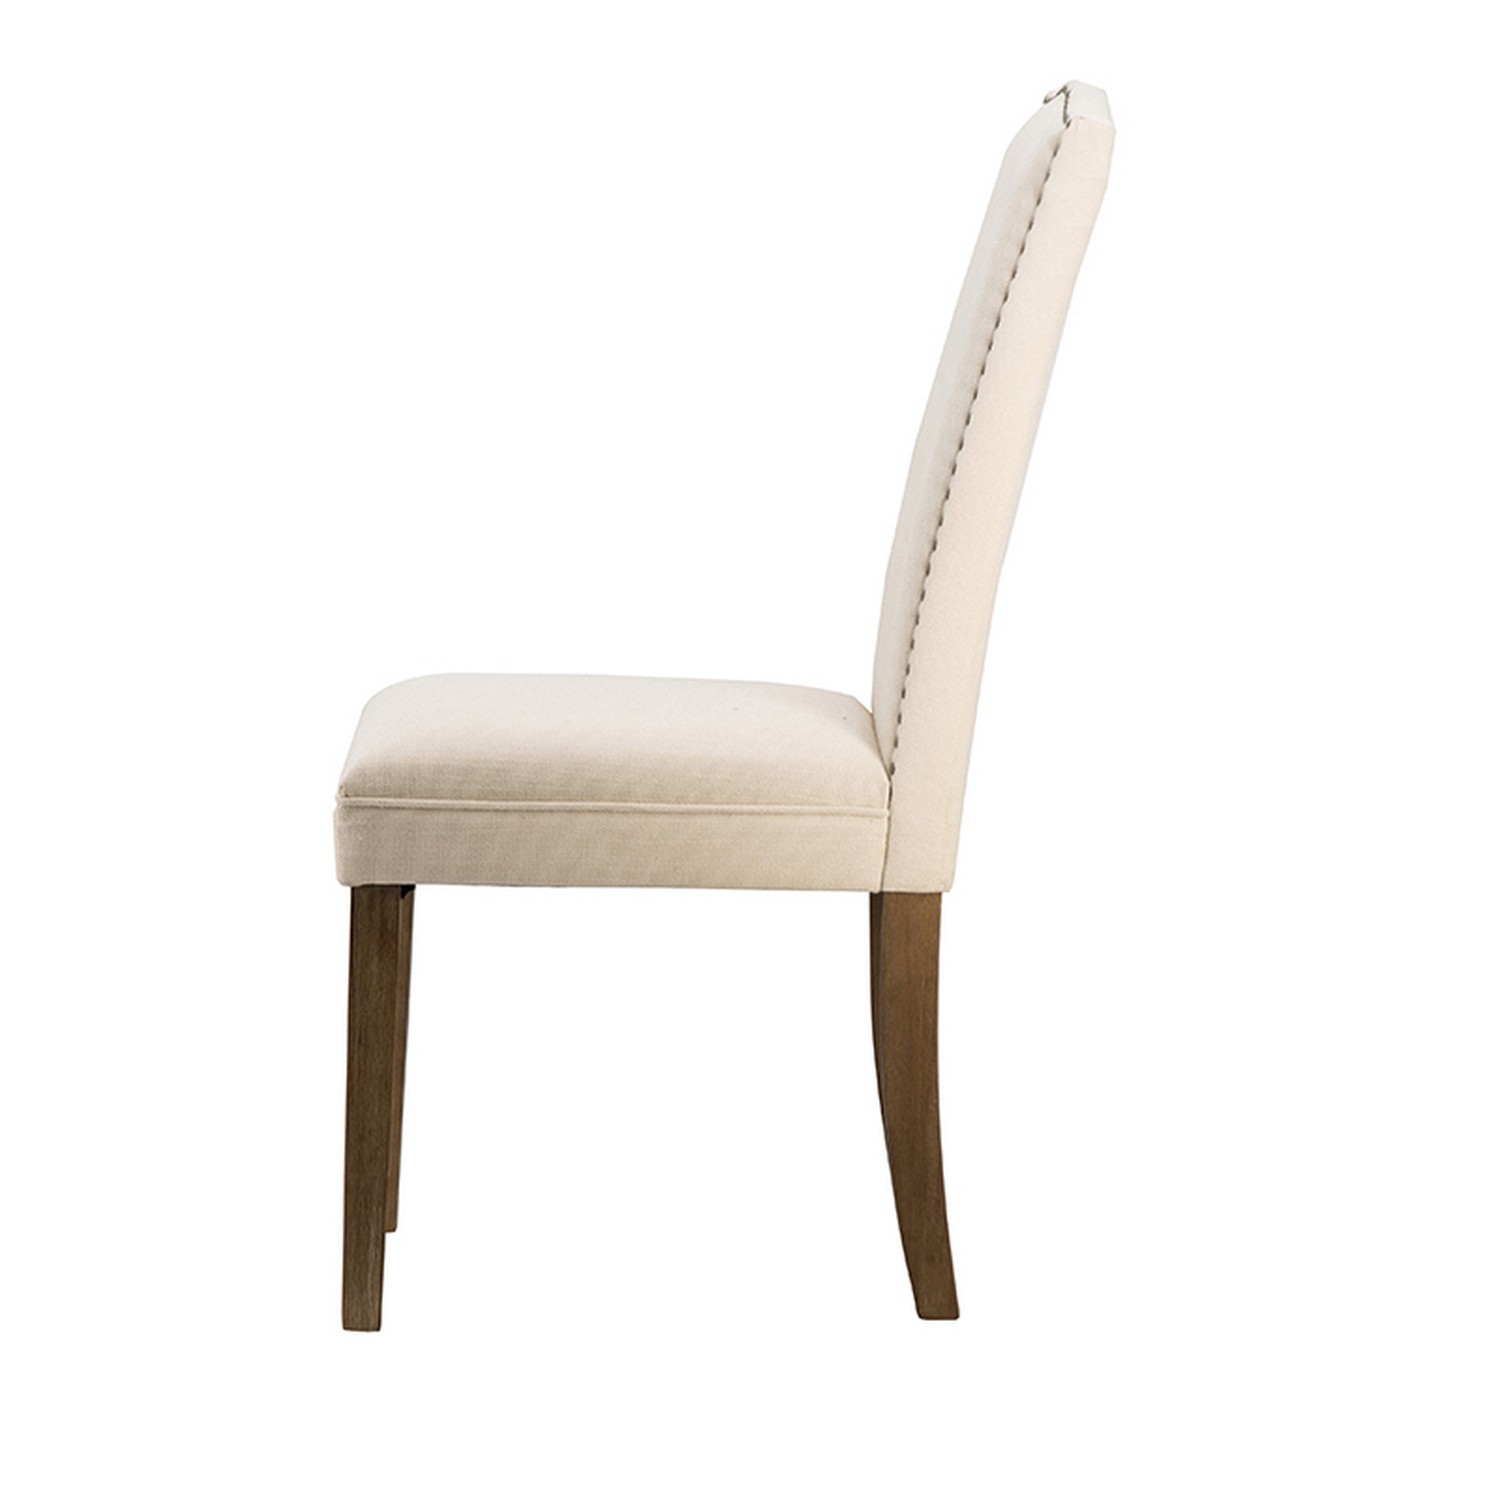 Elva 24 Inch Dining Chair, Beige Fabric, Nailhead Trim, Dark Wood Legs- Saltoro Sherpi